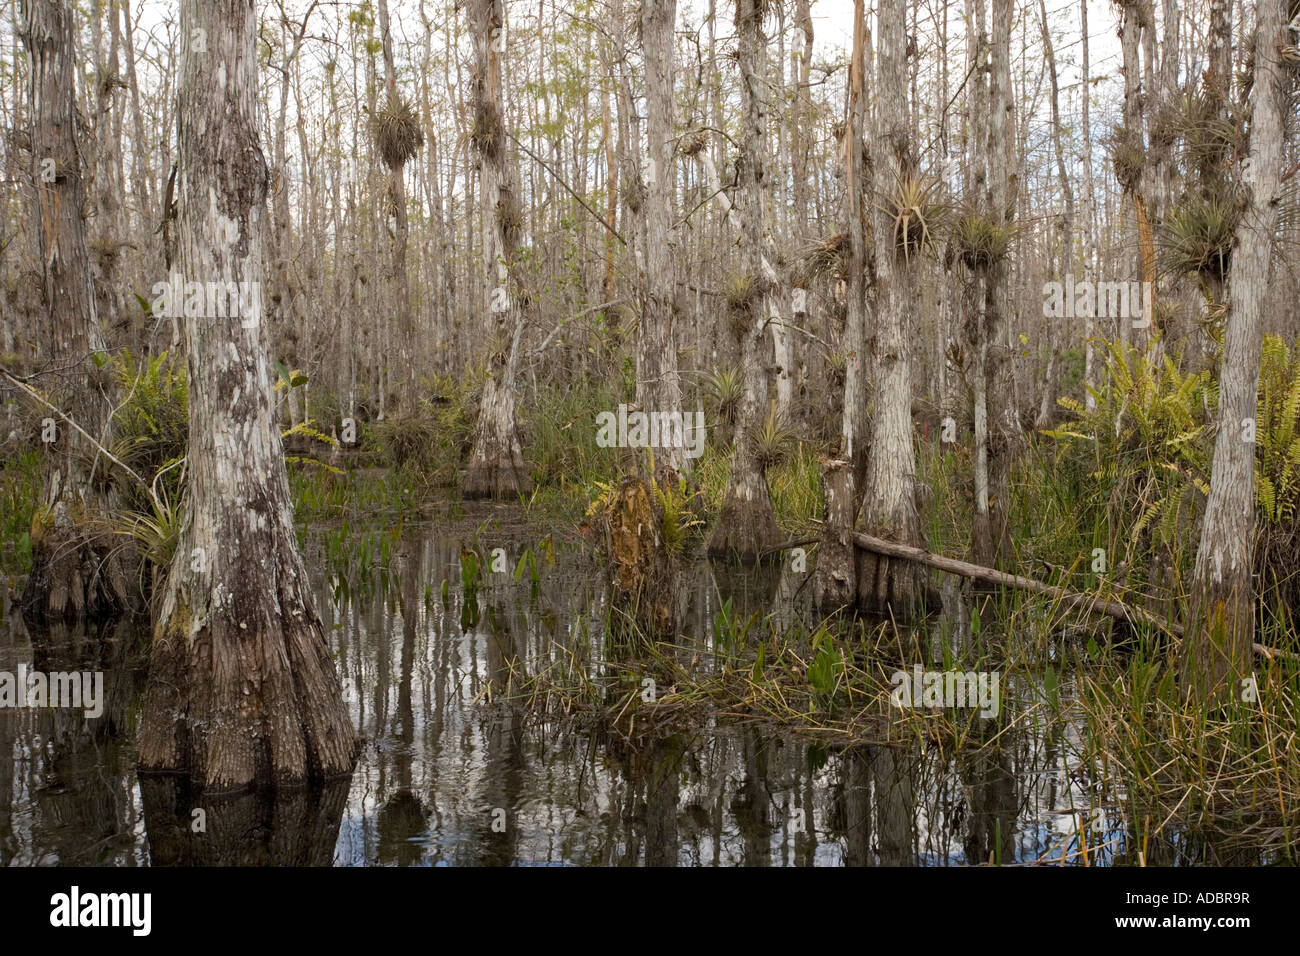 Swamp cypress woodland in Big Cypress National Preserve Everglades Florida With abundant epiphytes especially bromeliads Stock Photo